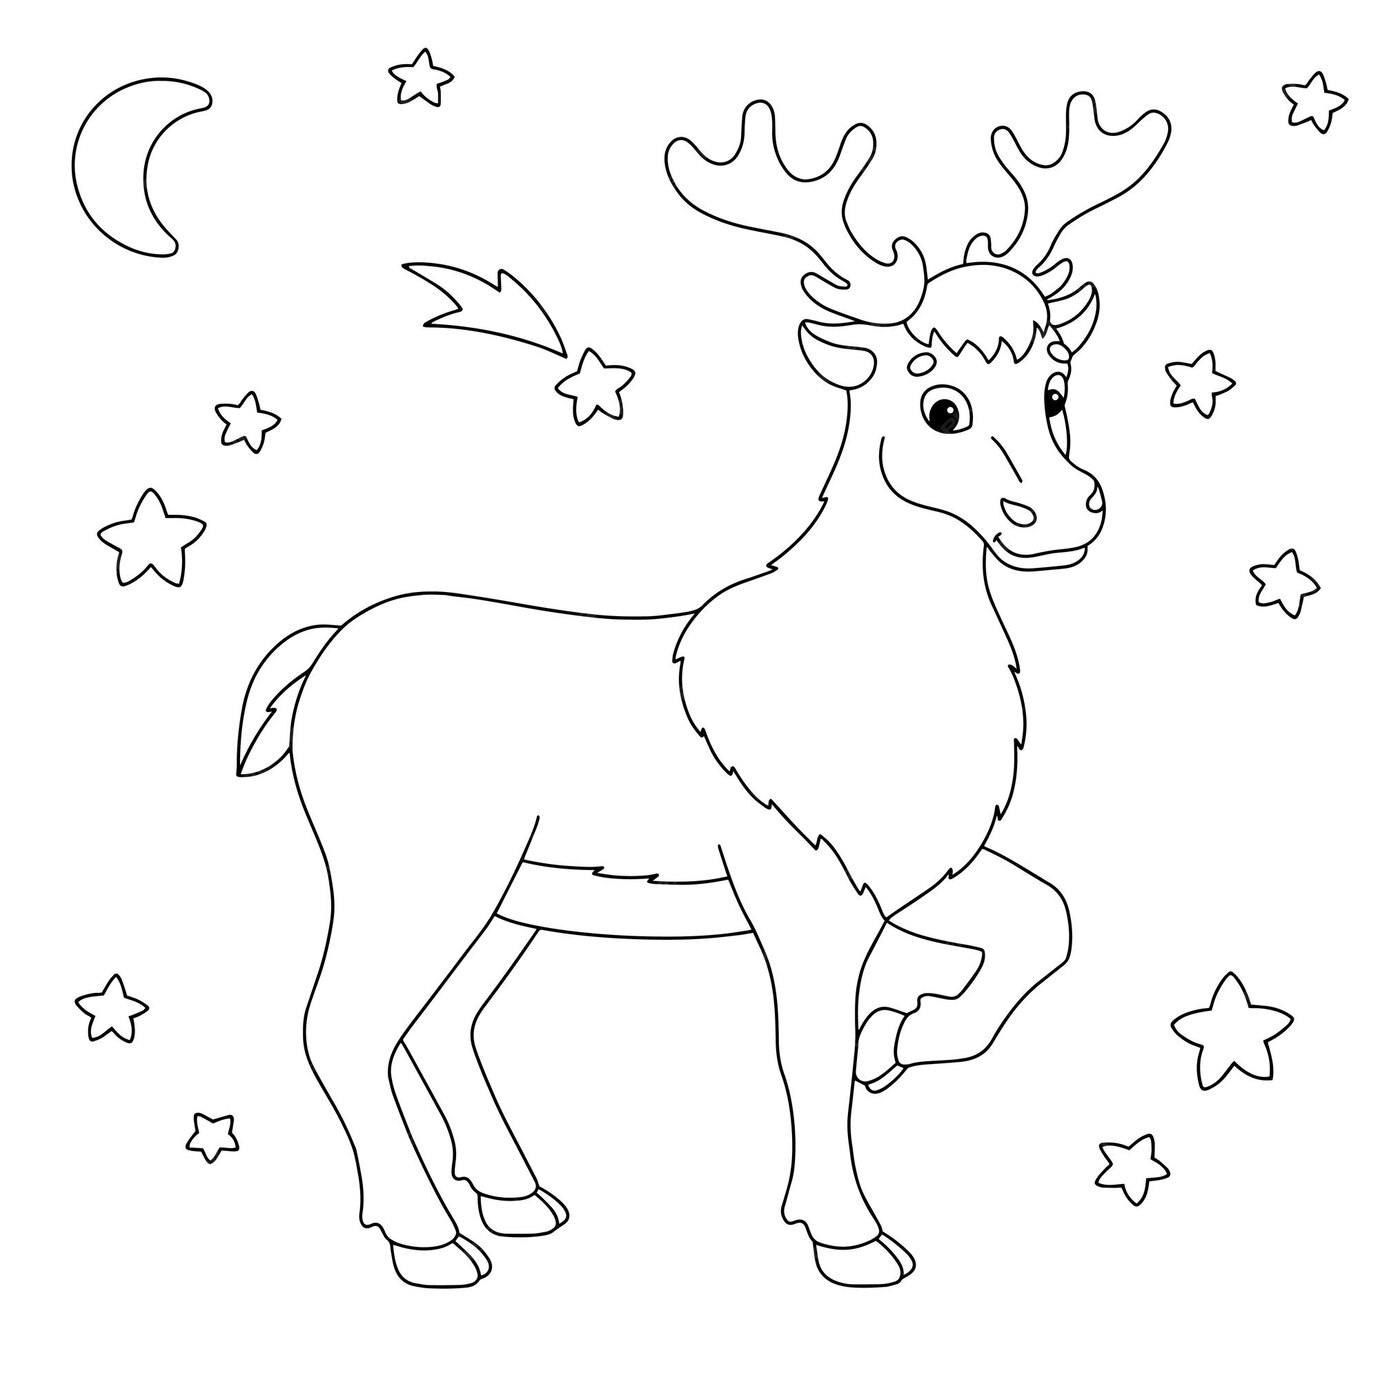 Premium Vector | Animal deer coloring book page for kids